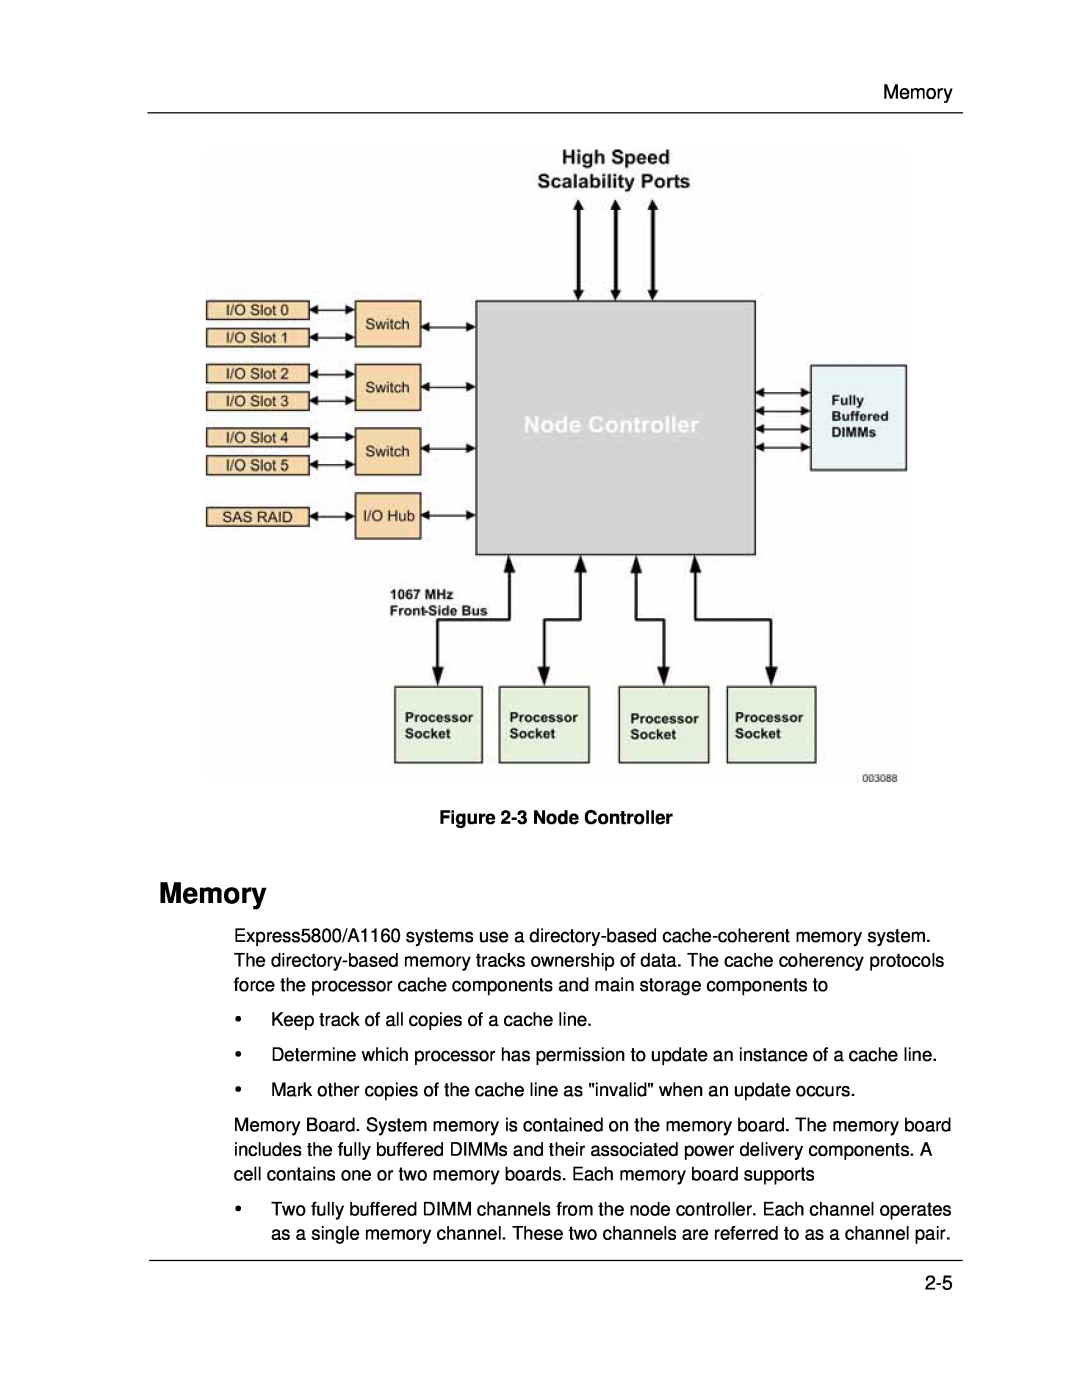 NEC A1160 manual Memory, 3Node Controller 